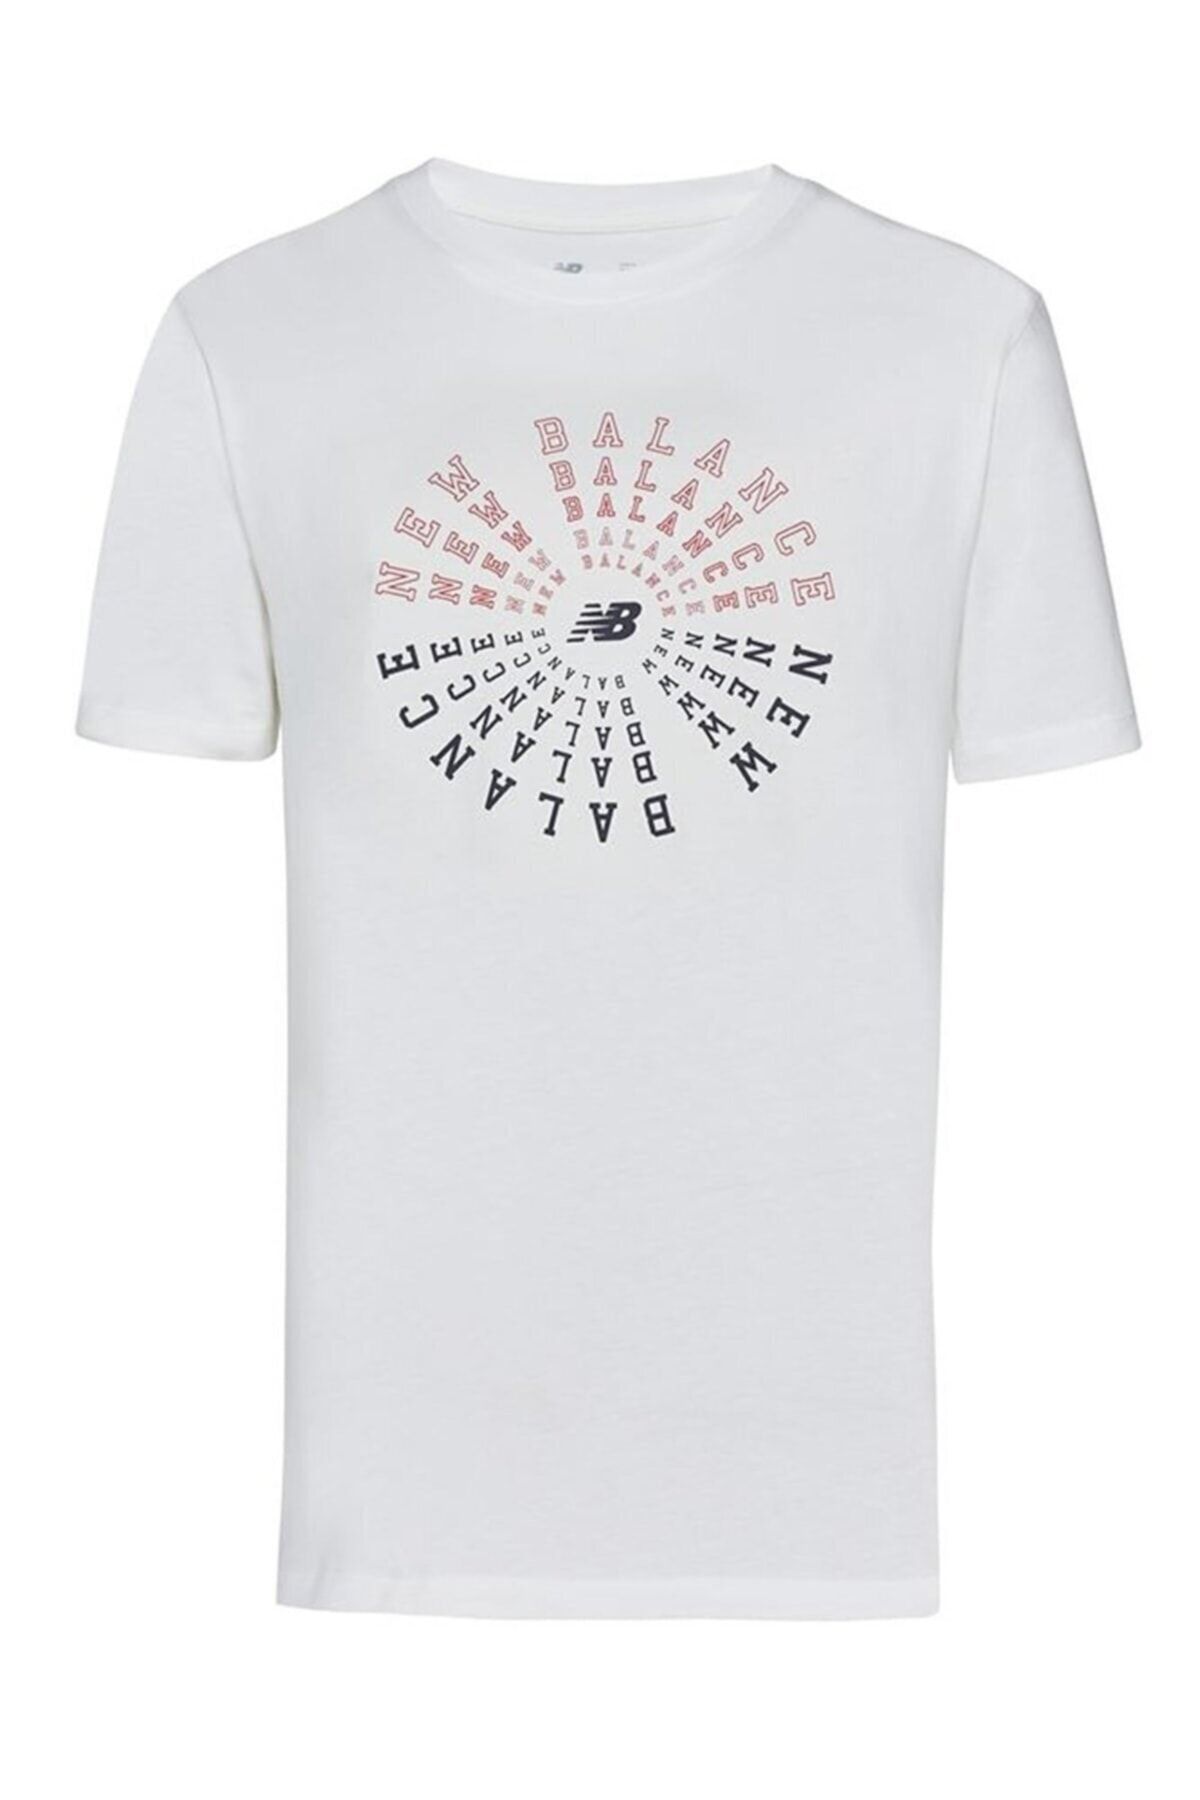 New Balance Mens Lifestyle T-shirt